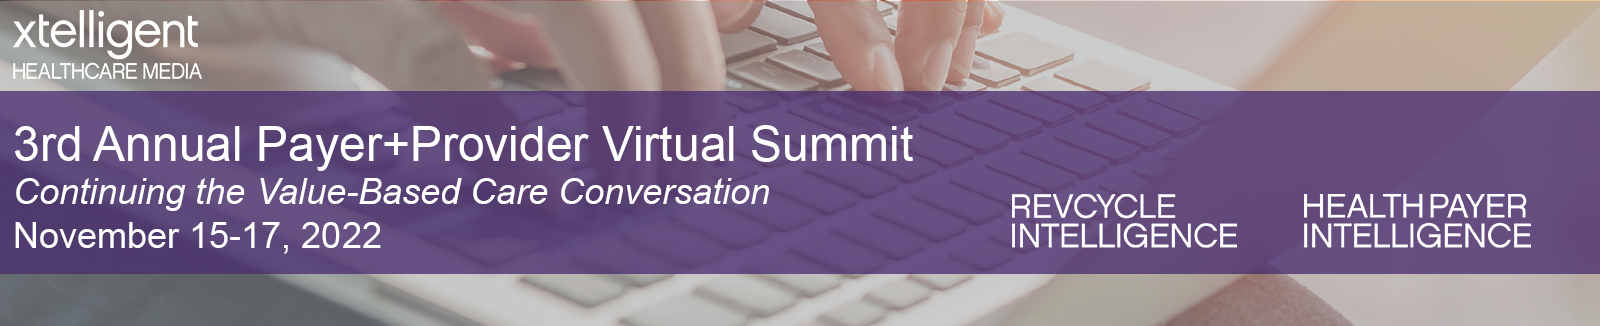 3rd Annual Payer+Provider Virtual Summit